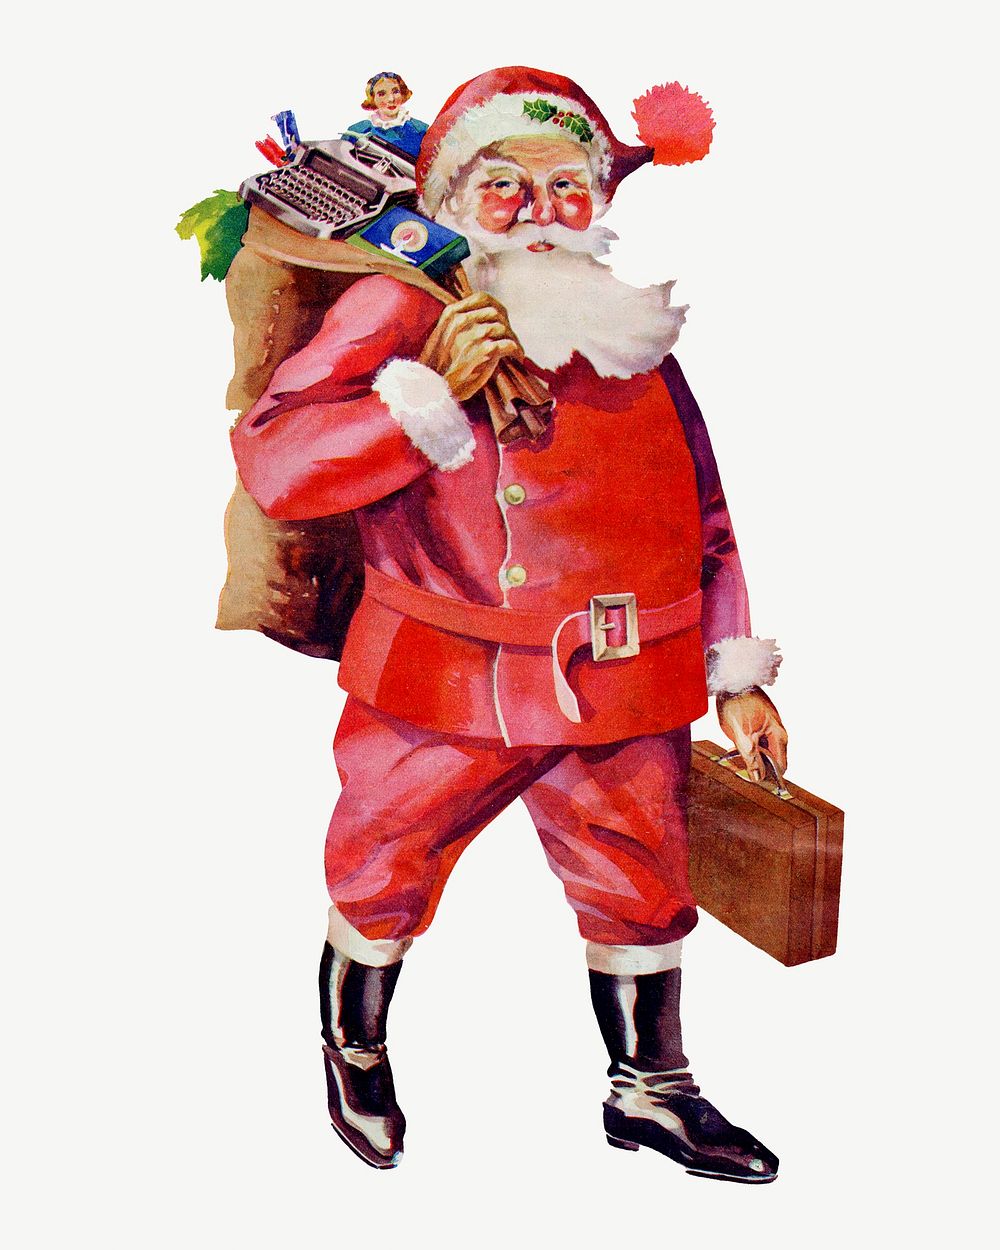 Santa Claus, vintage Christmas illustration psd. Remixed by rawpixel.